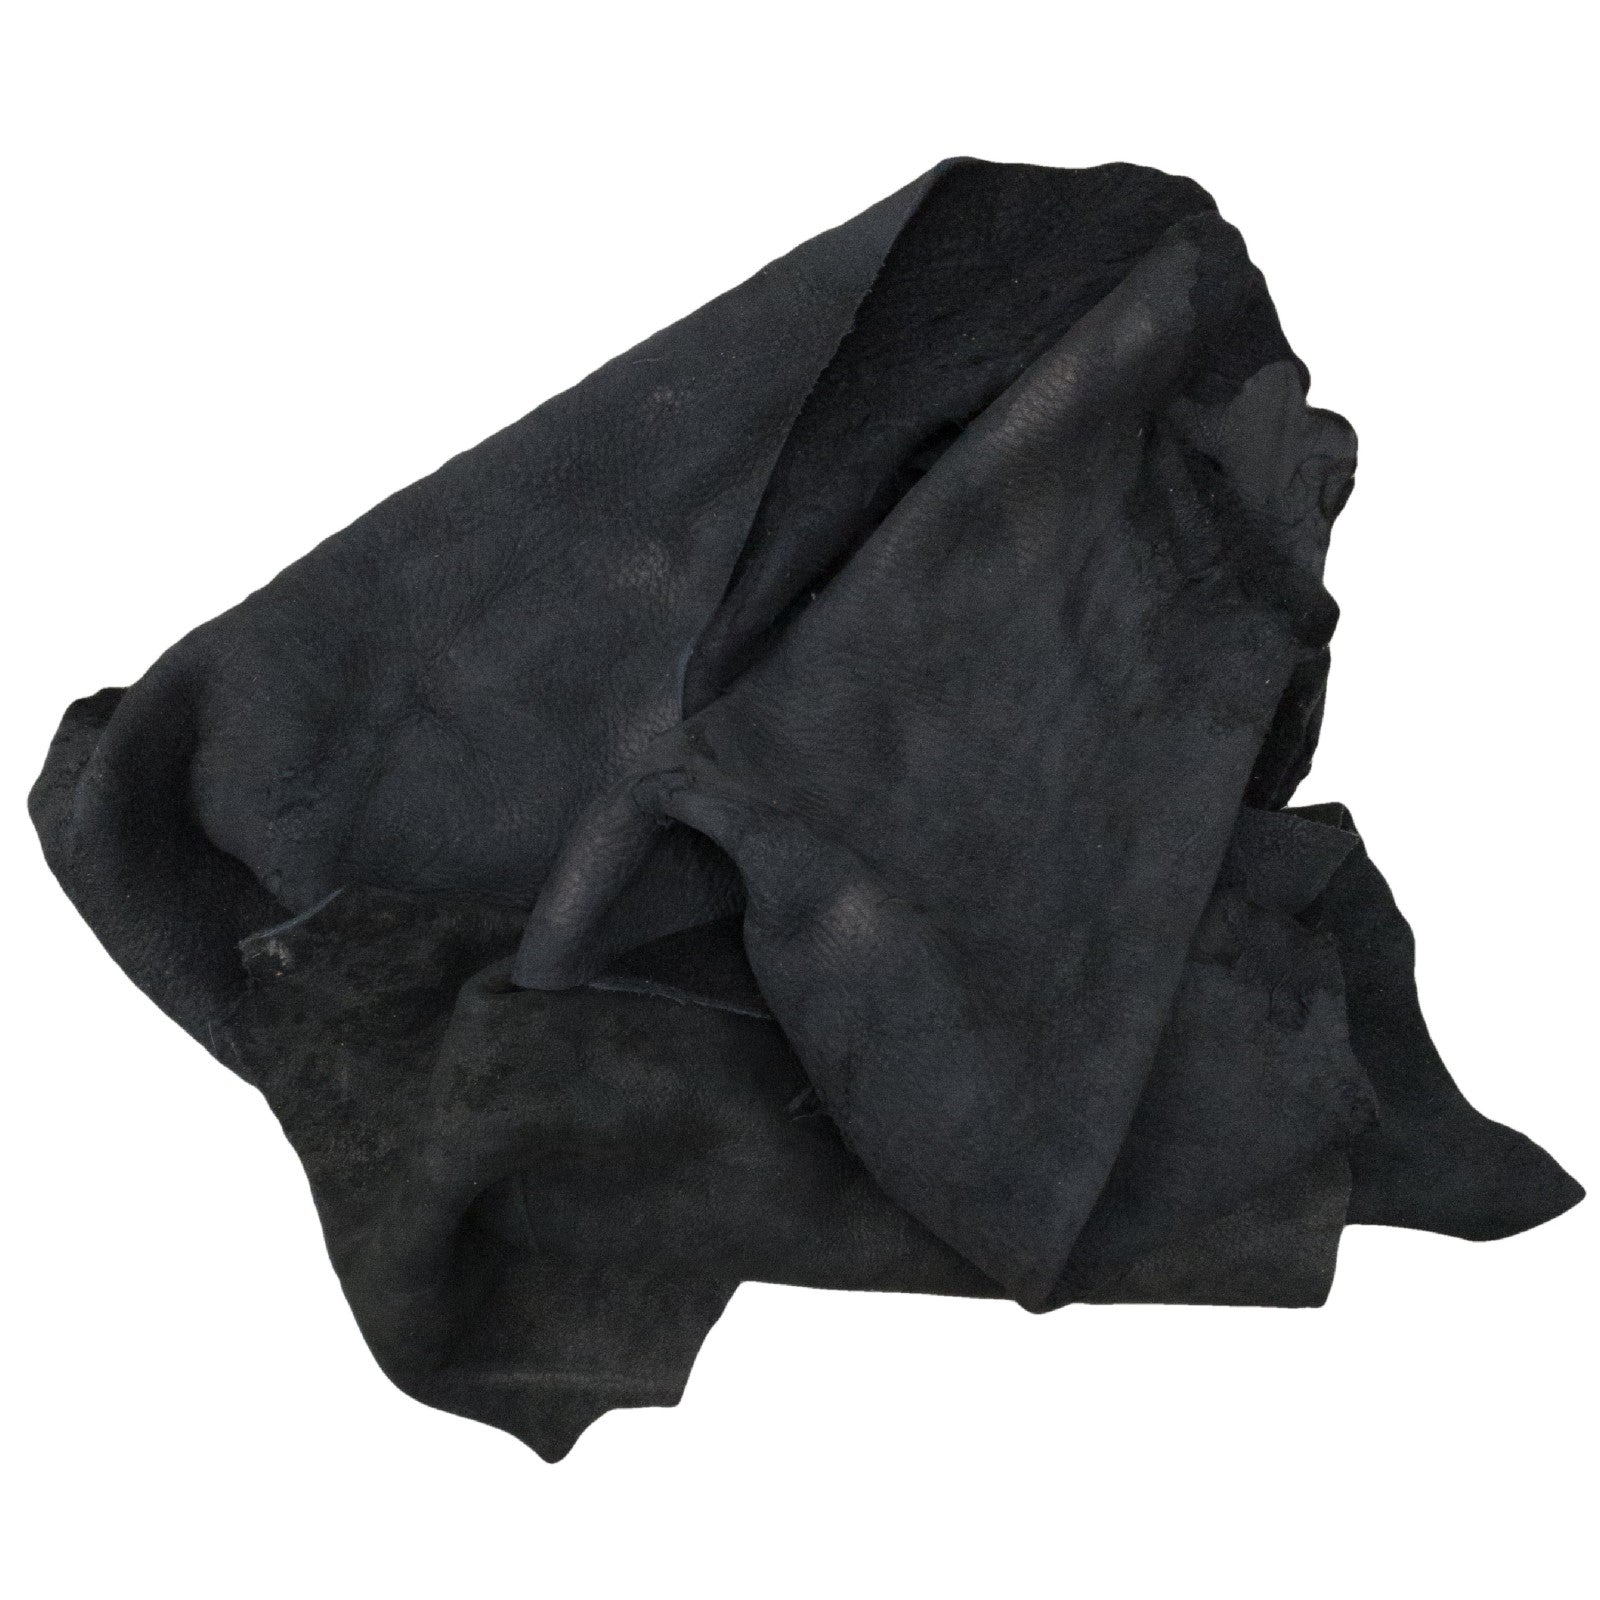 Black Rustic Bison Scrap, 6-9 oz, 3 lb Bison Scrap Bag, Large Pieces, 3 lbs | The Leather Guy